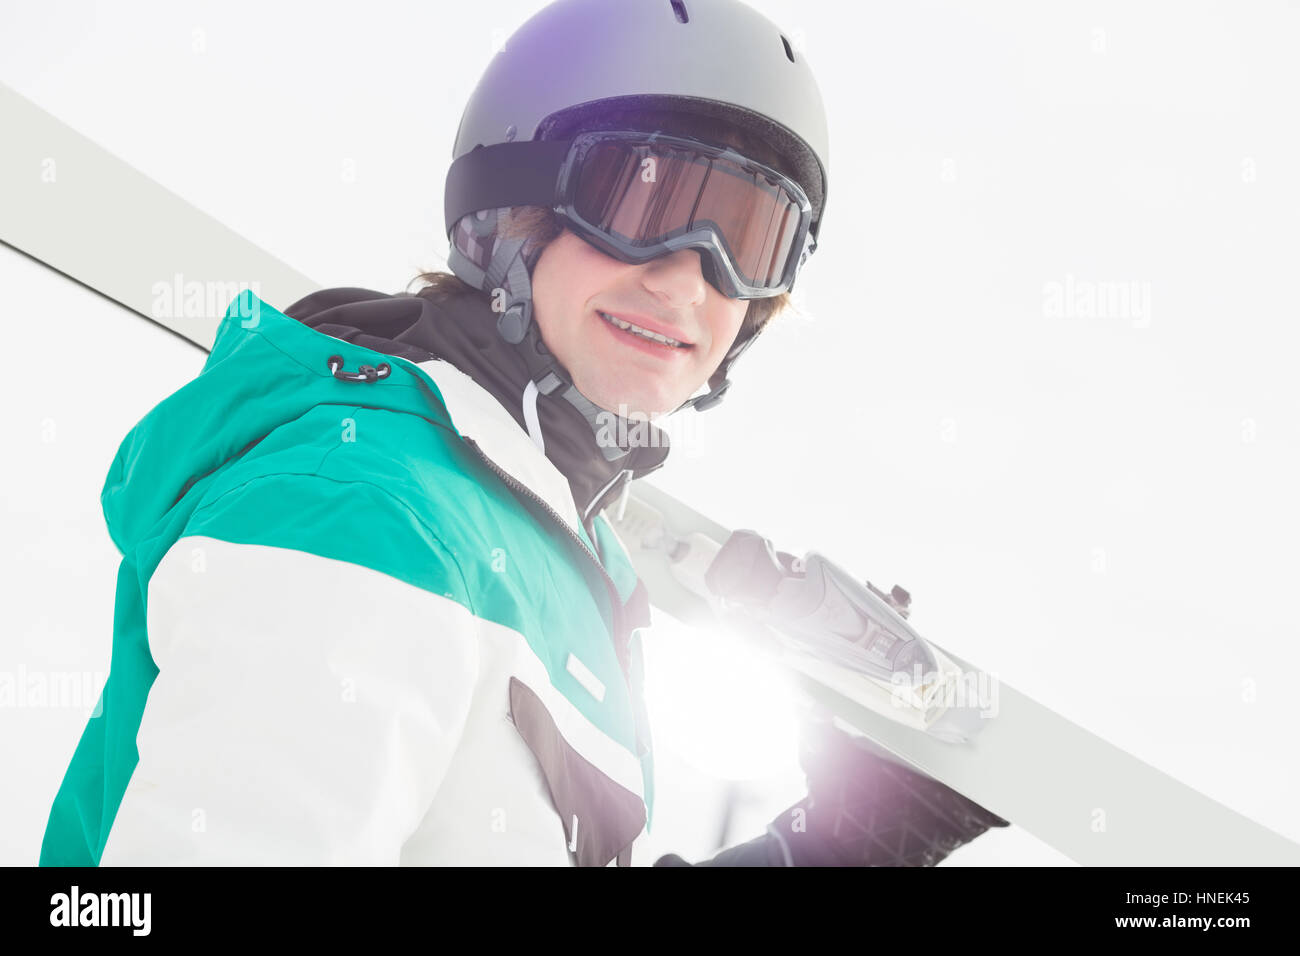 Portrait of smiling young man carrying skis contre ciel clair Banque D'Images